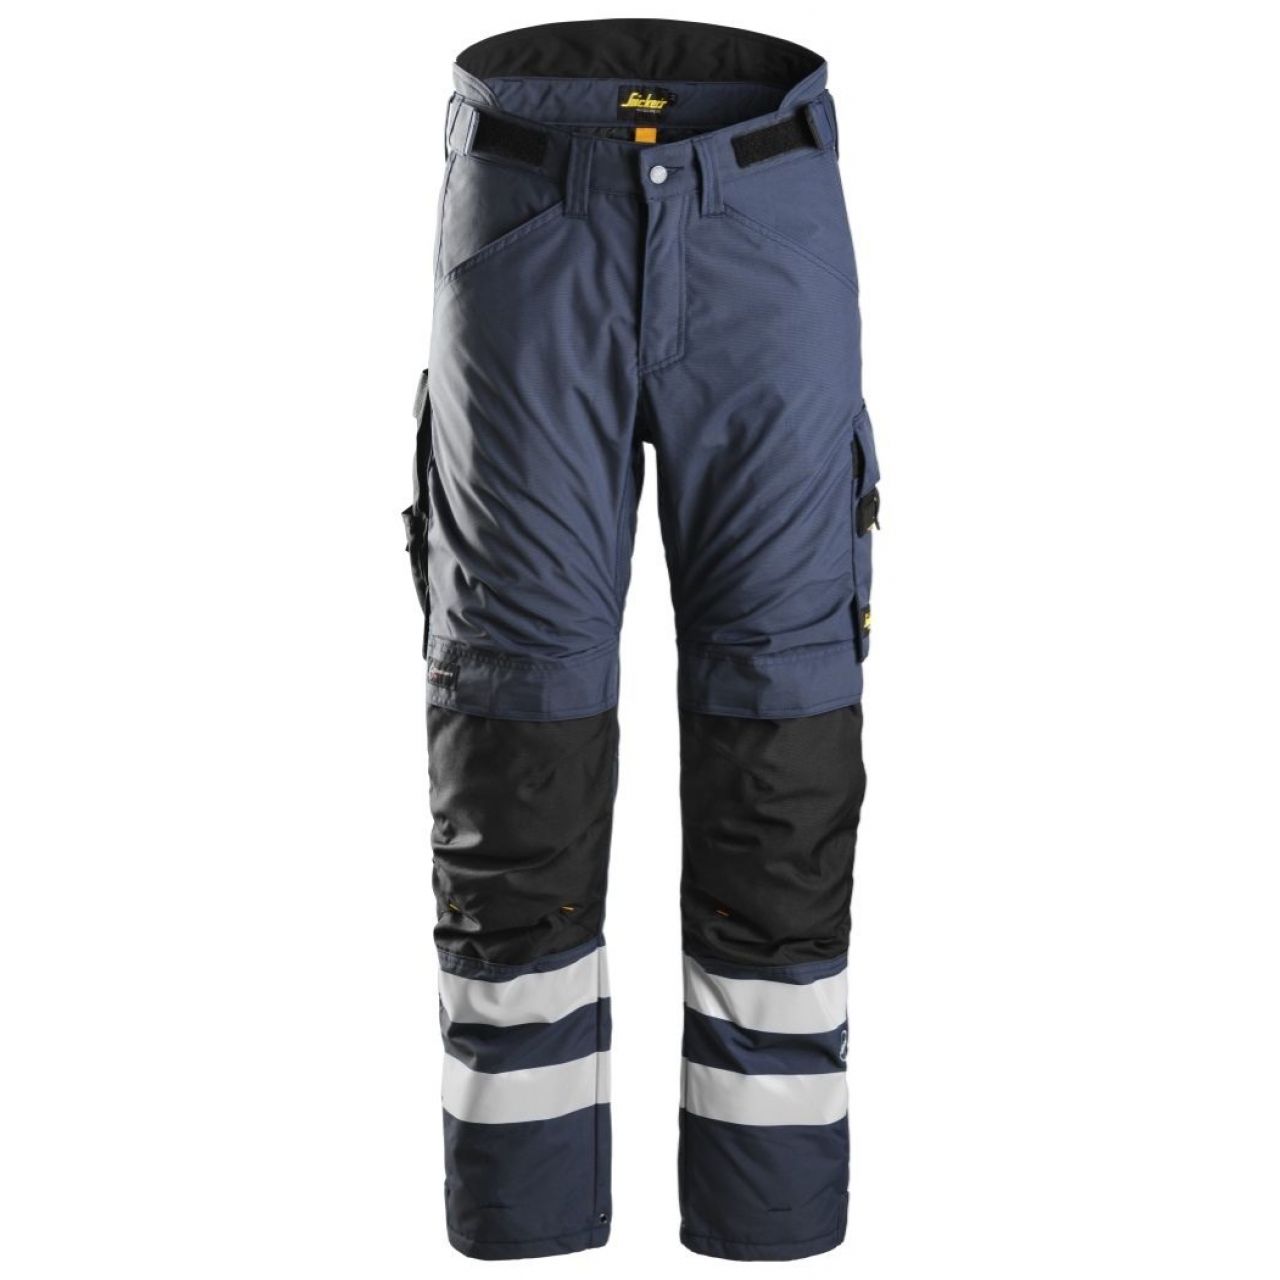 Pantalon aislante AllroundWork 37.5® azul marino-negro talla M